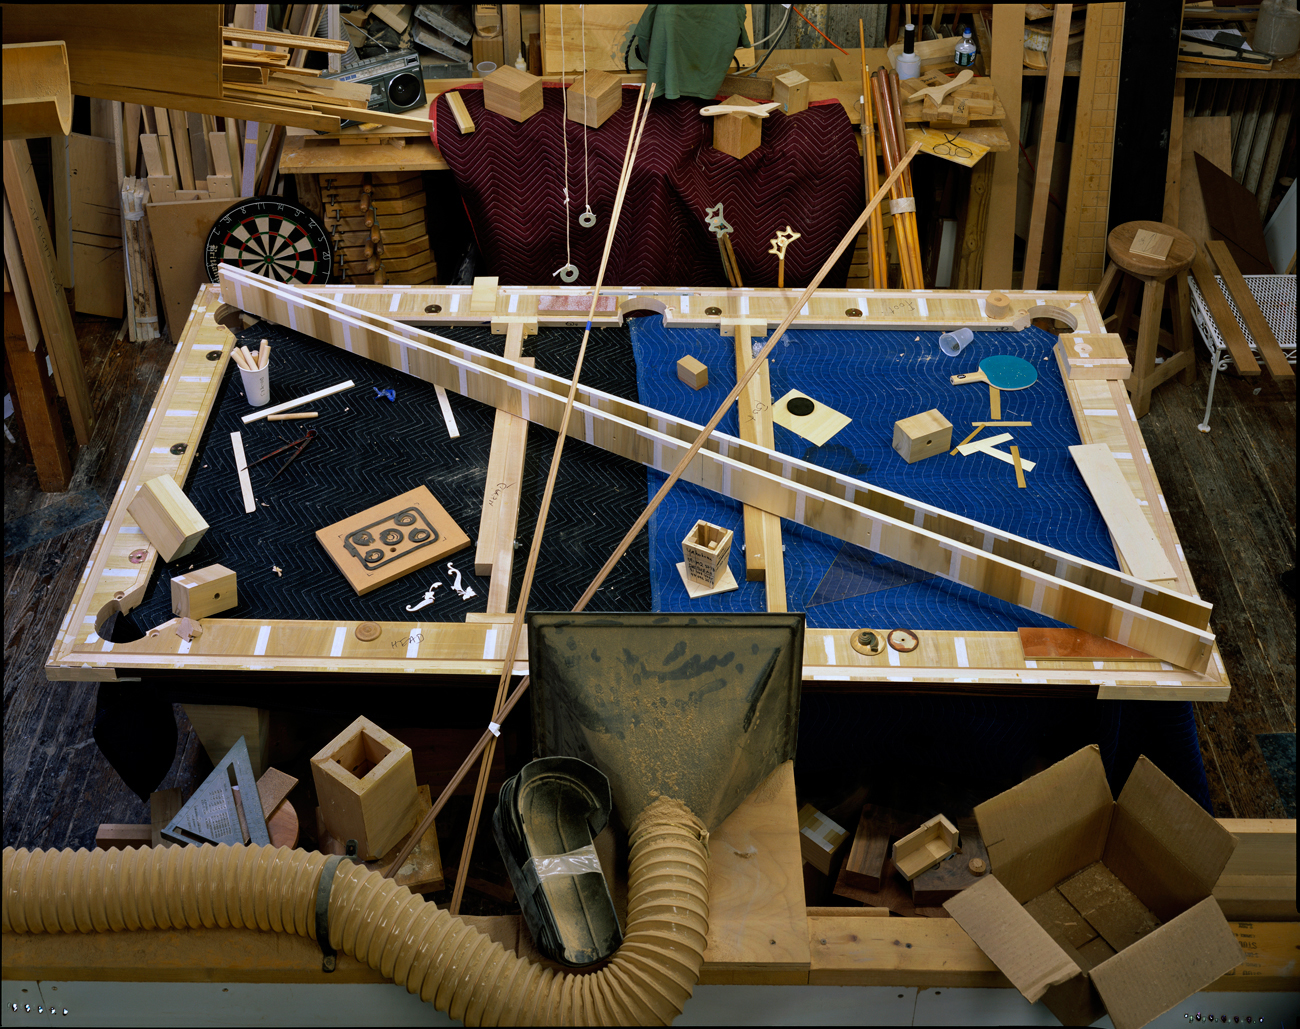 Billiard table construction, Blatt Billiards, New York City, 2014